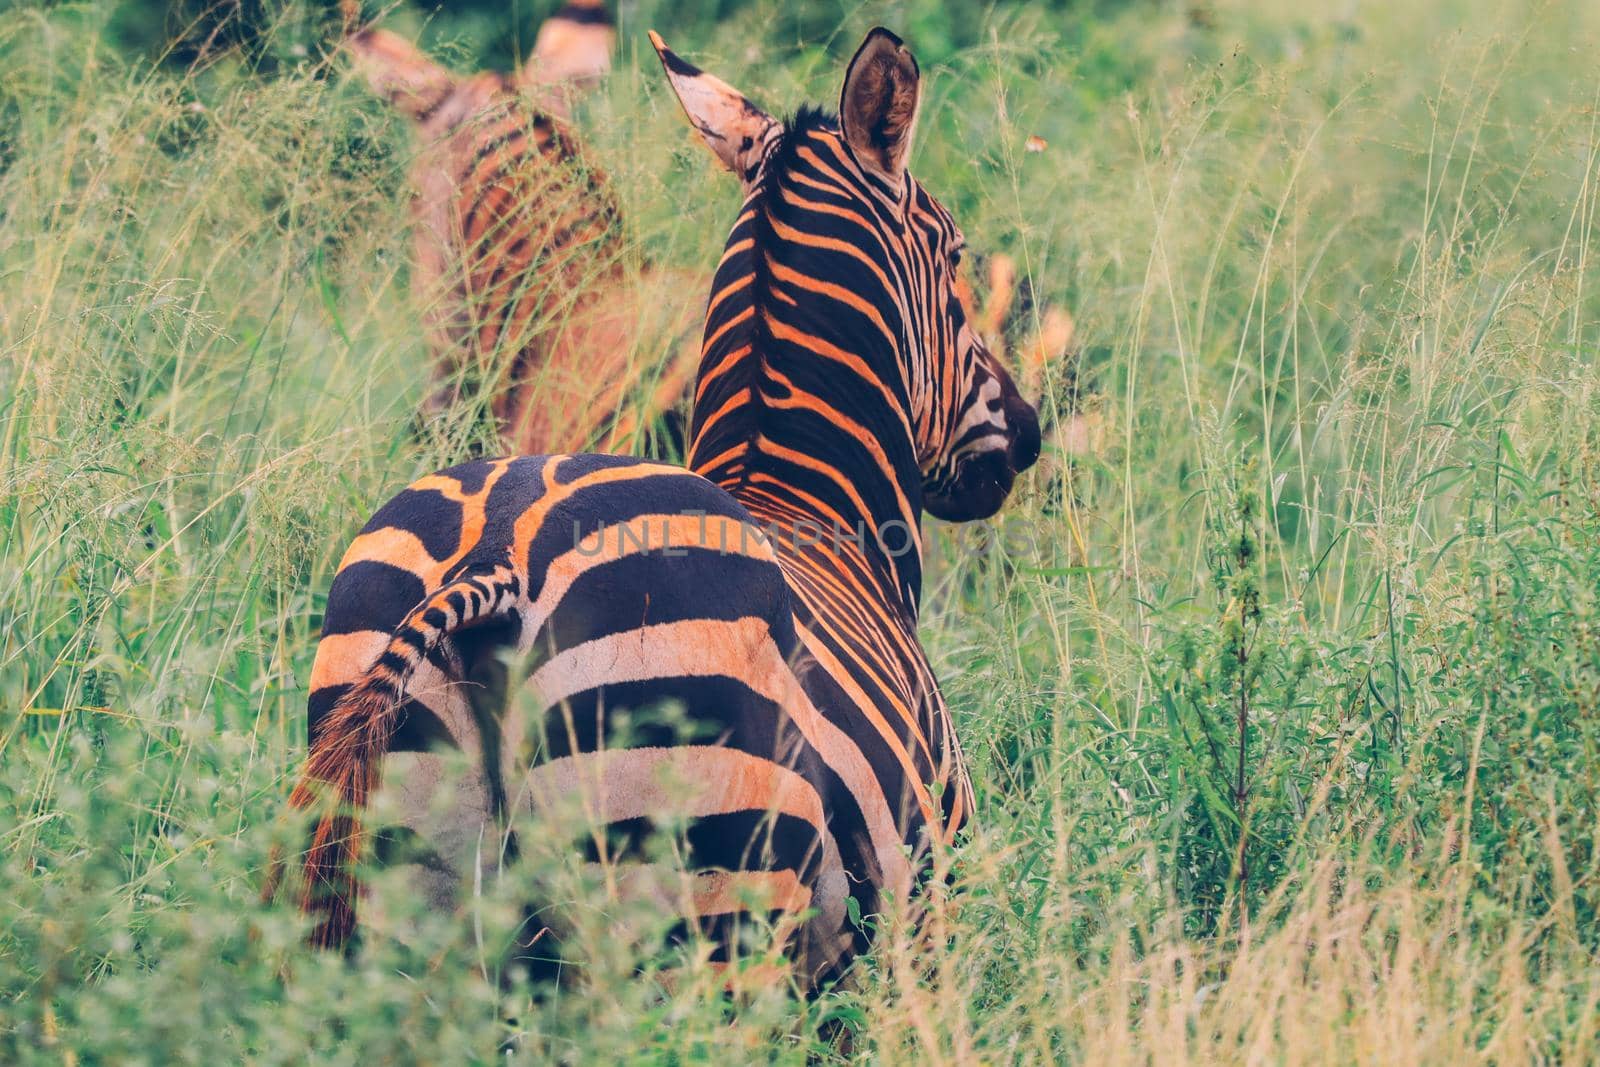 Zebras in Amboseli National Park, Kenya, Africa by Weltblick